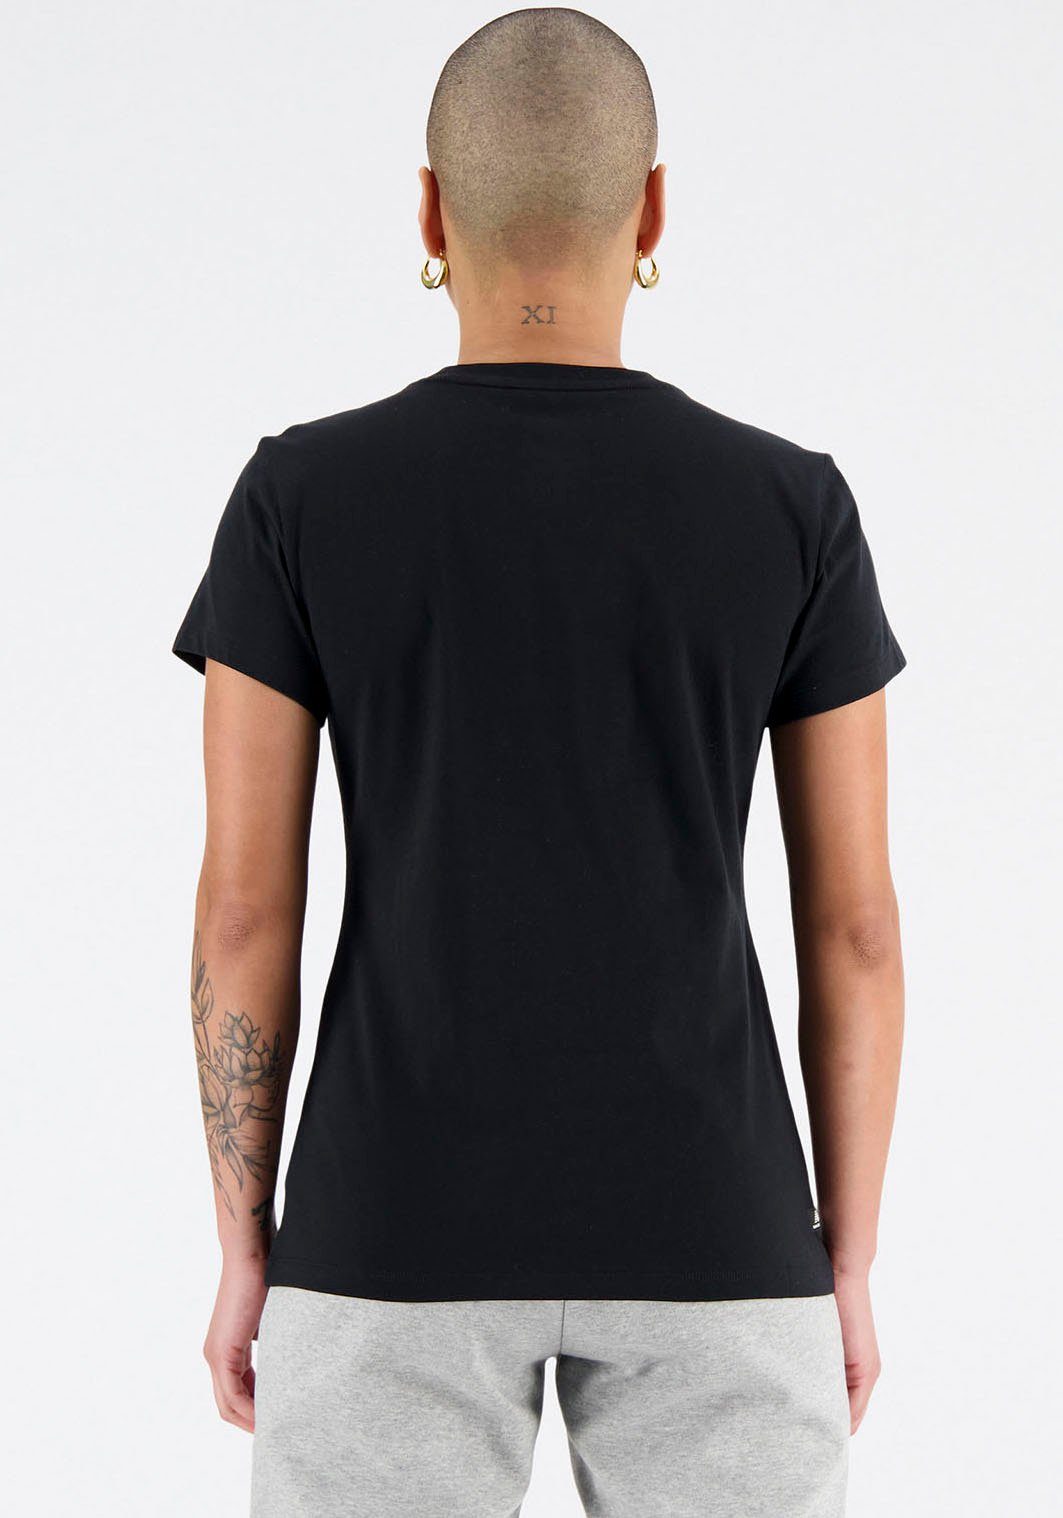 001 T-Shirt Balance New black